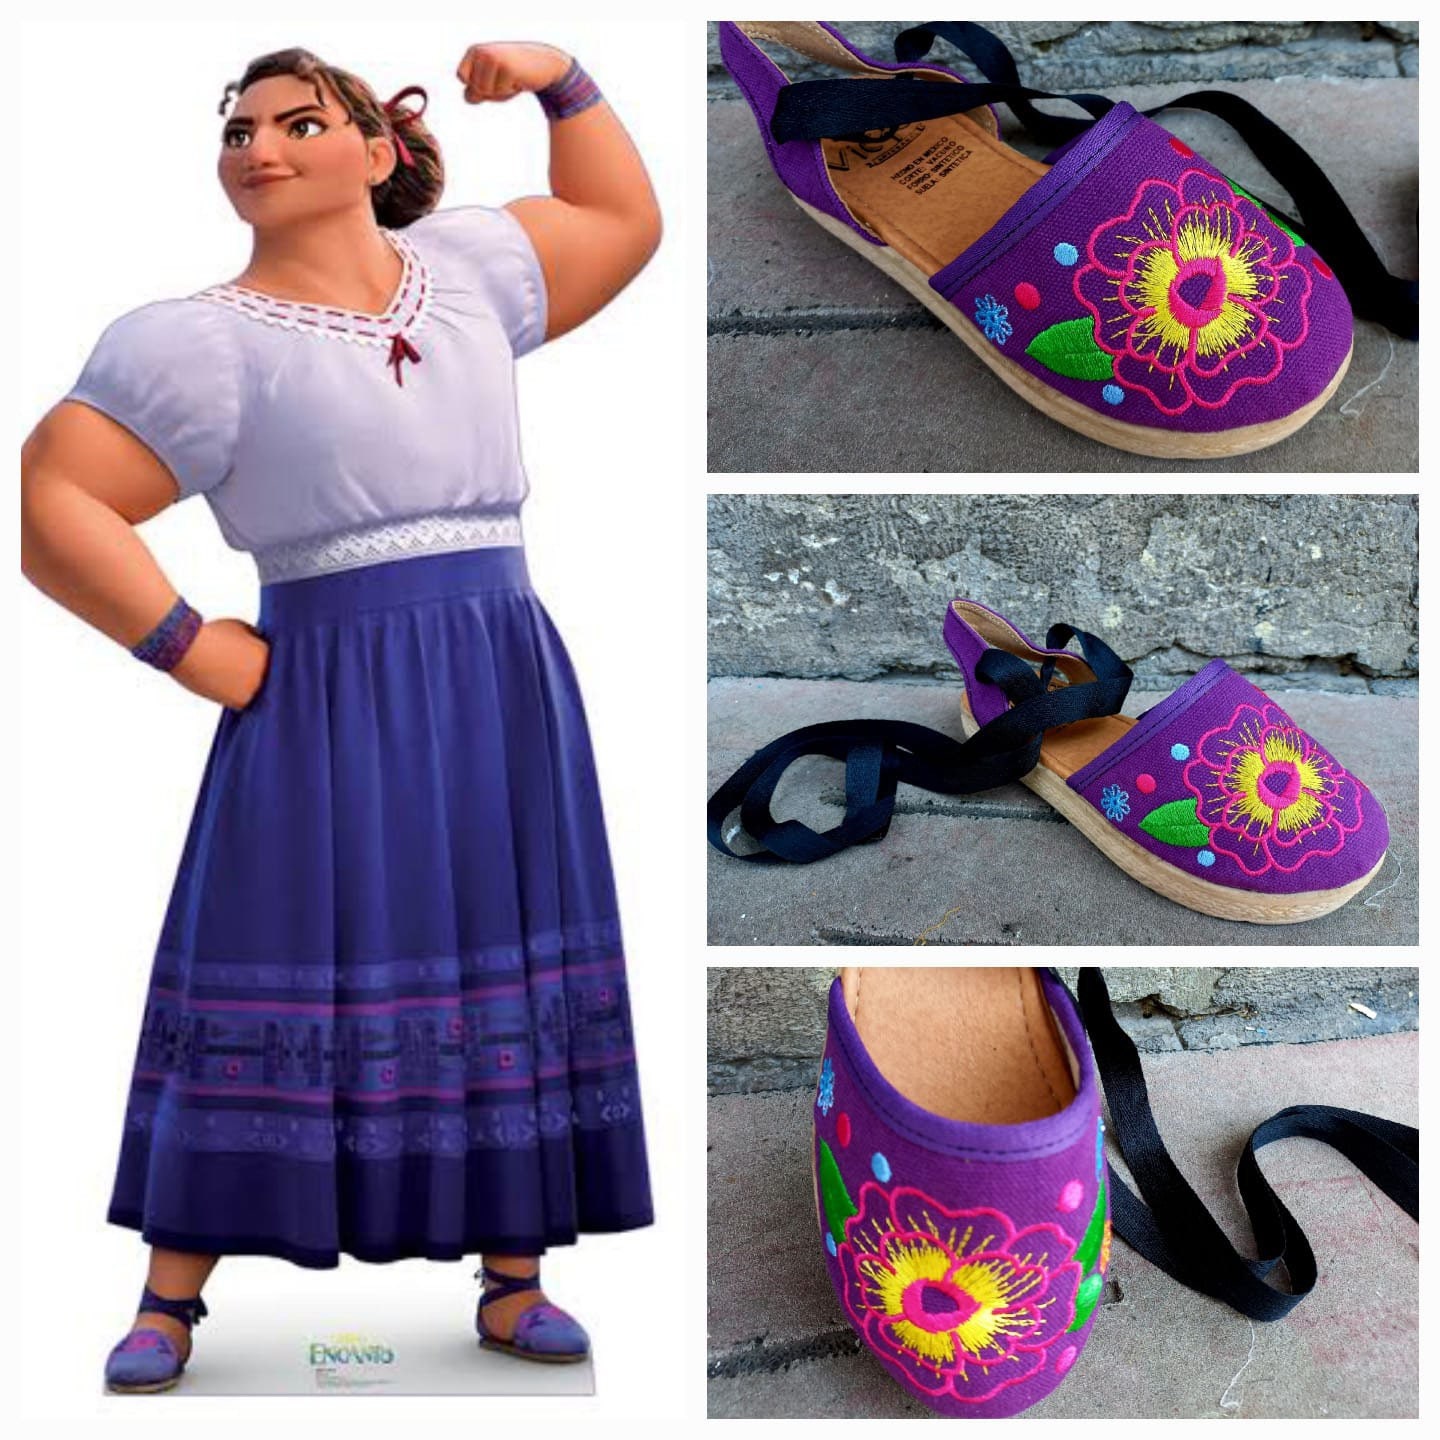 Encanto Mirabel Shoes Mirabel Encanto Sandalsmirabel Outfitencanto Outfit  mirabel Madrigal Custome for Kidsdisney Inspired 